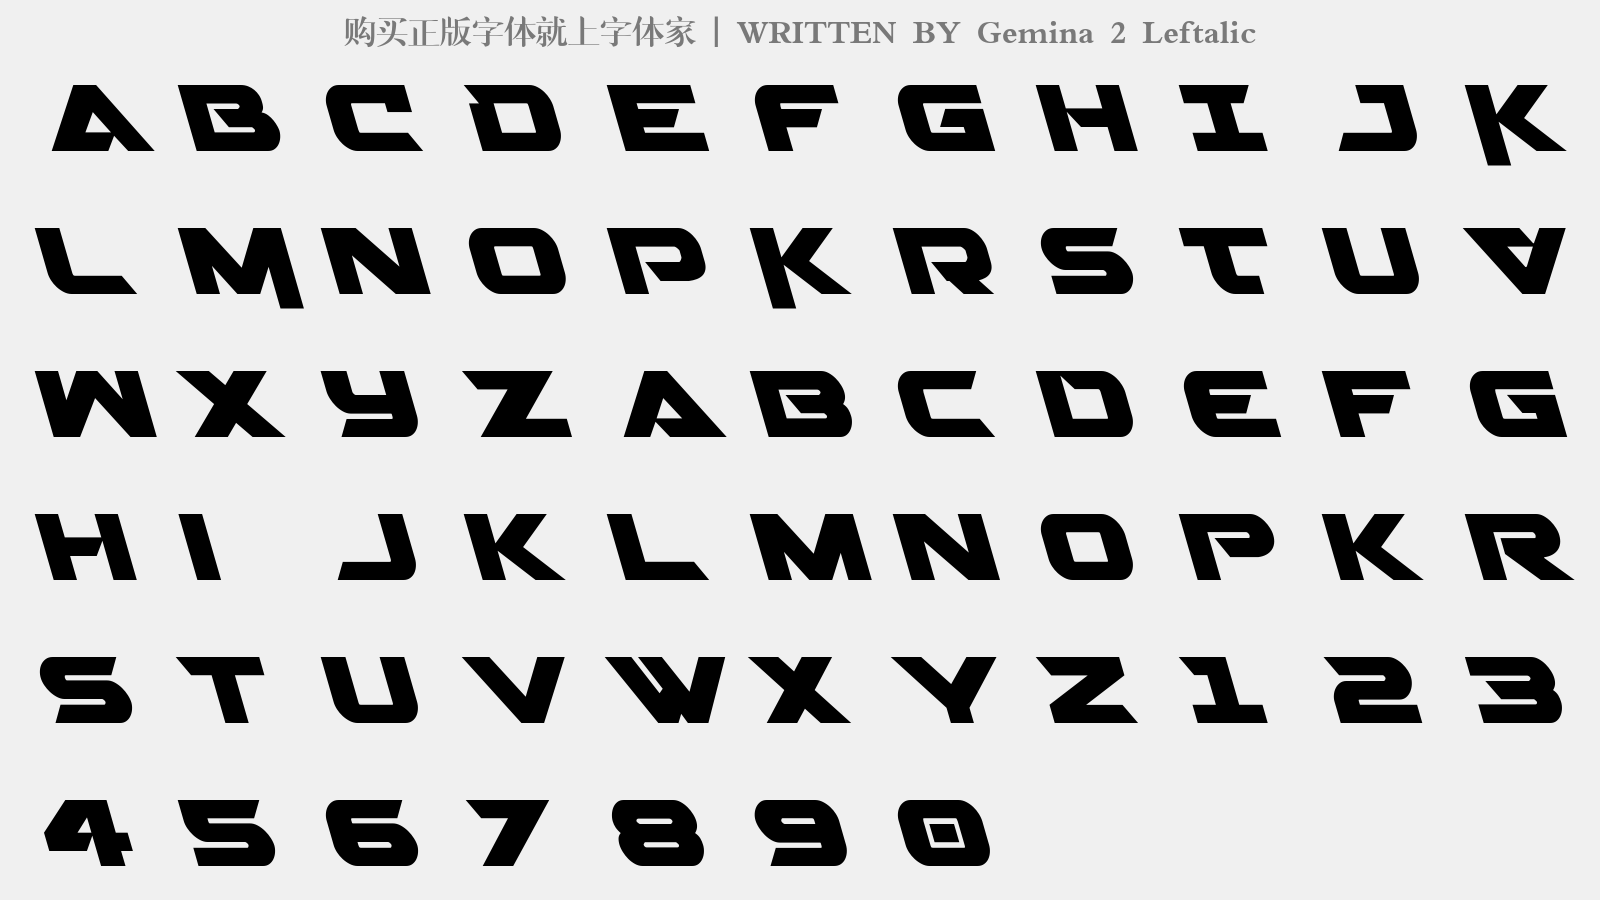 Gemina 2 Leftalic - 大写字母/小写字母/数字